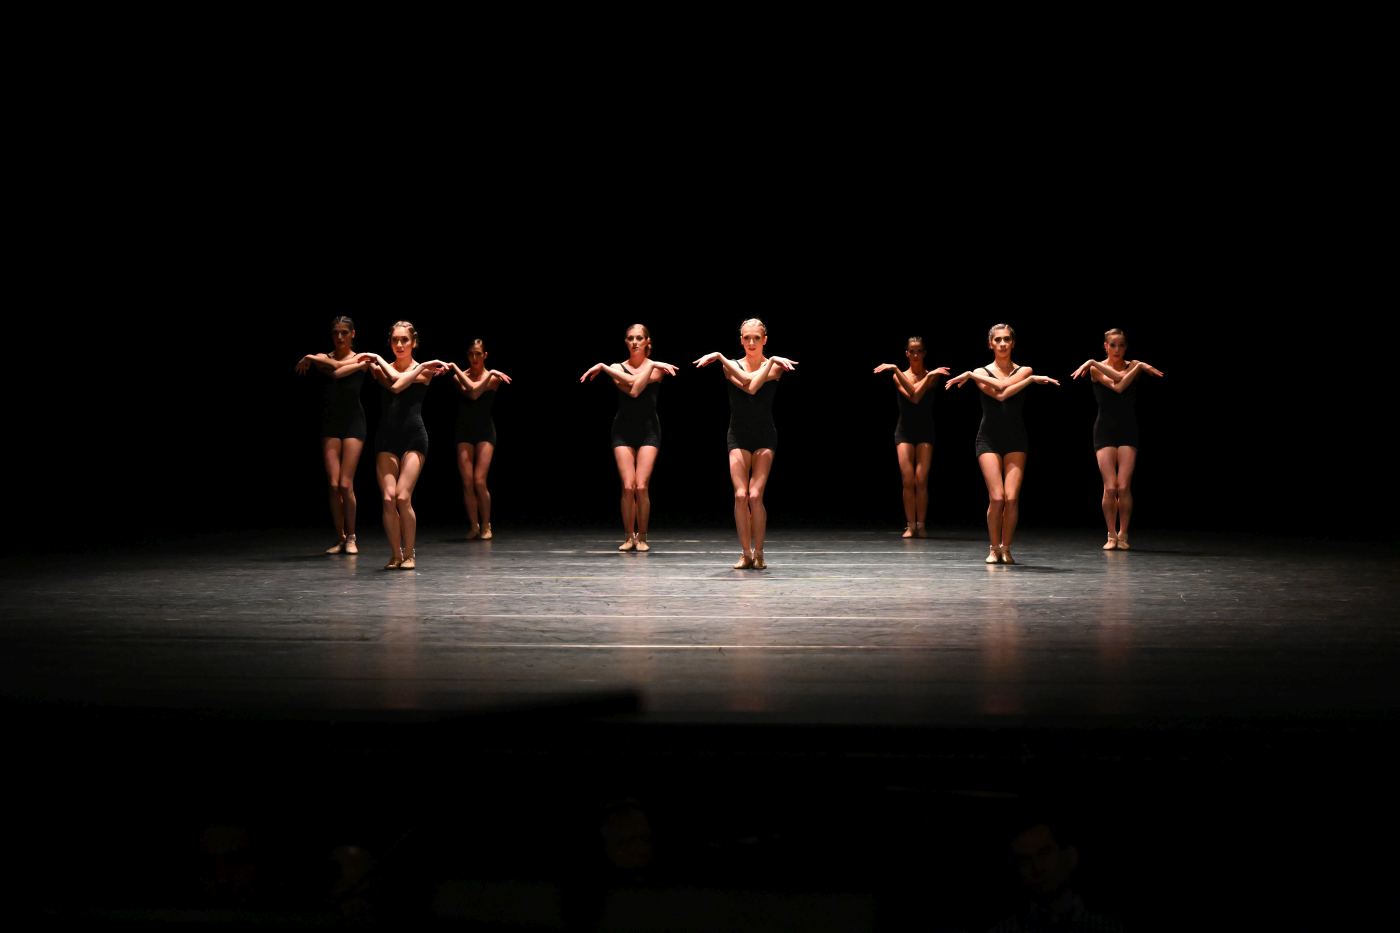 7. Ensemble, “Falling Angels” by J.Kylián, Stuttgart Ballet 2021 © Stuttgart Ballet